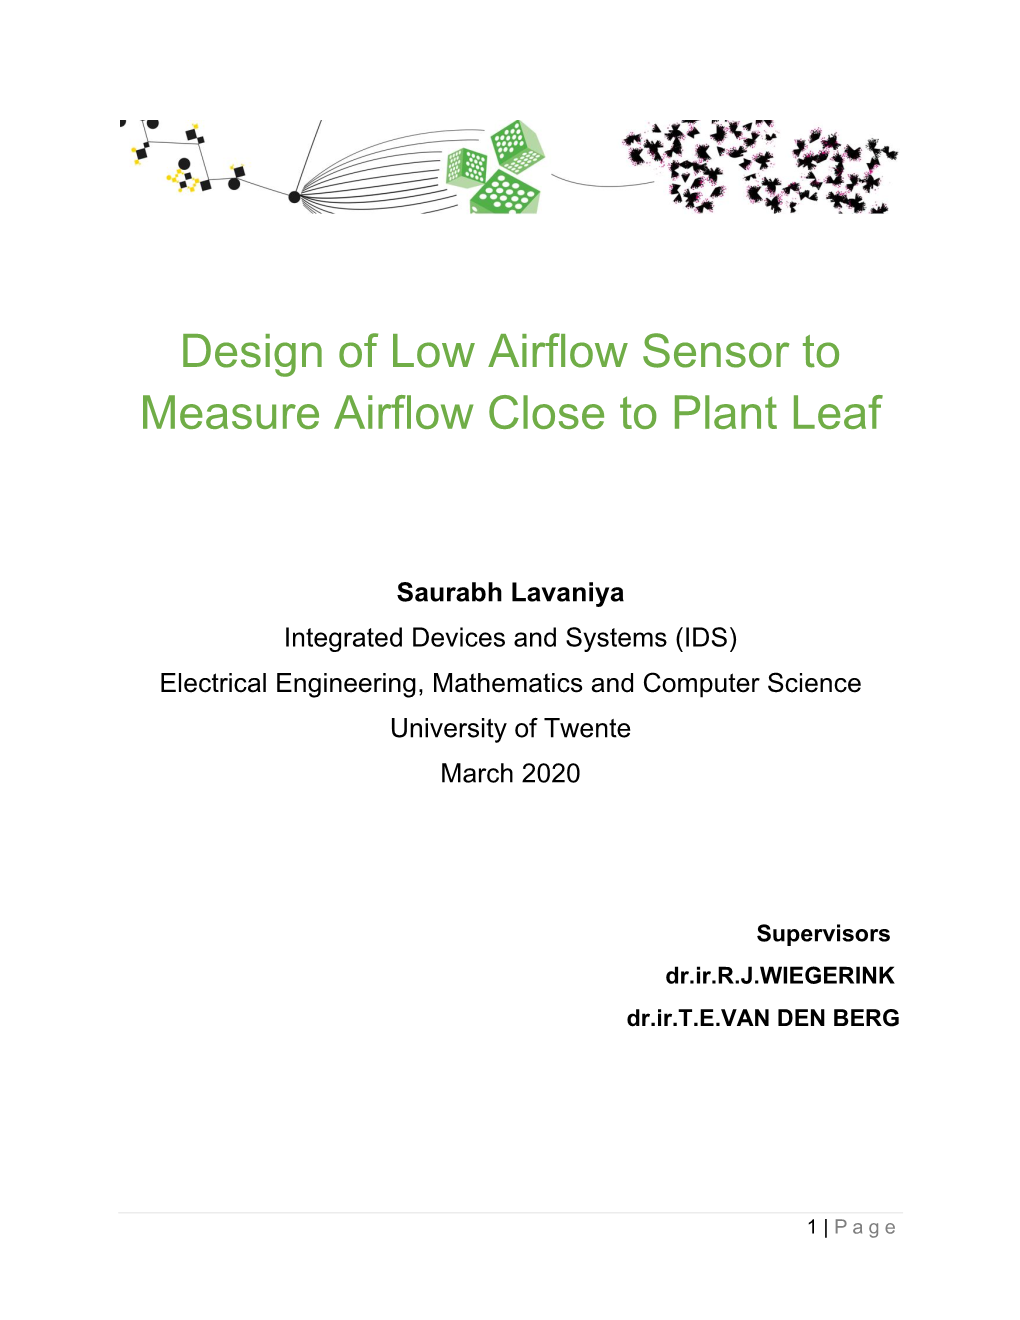 Design of Low Airflow Sensor to Measure Airflow Close to Plant Leaf